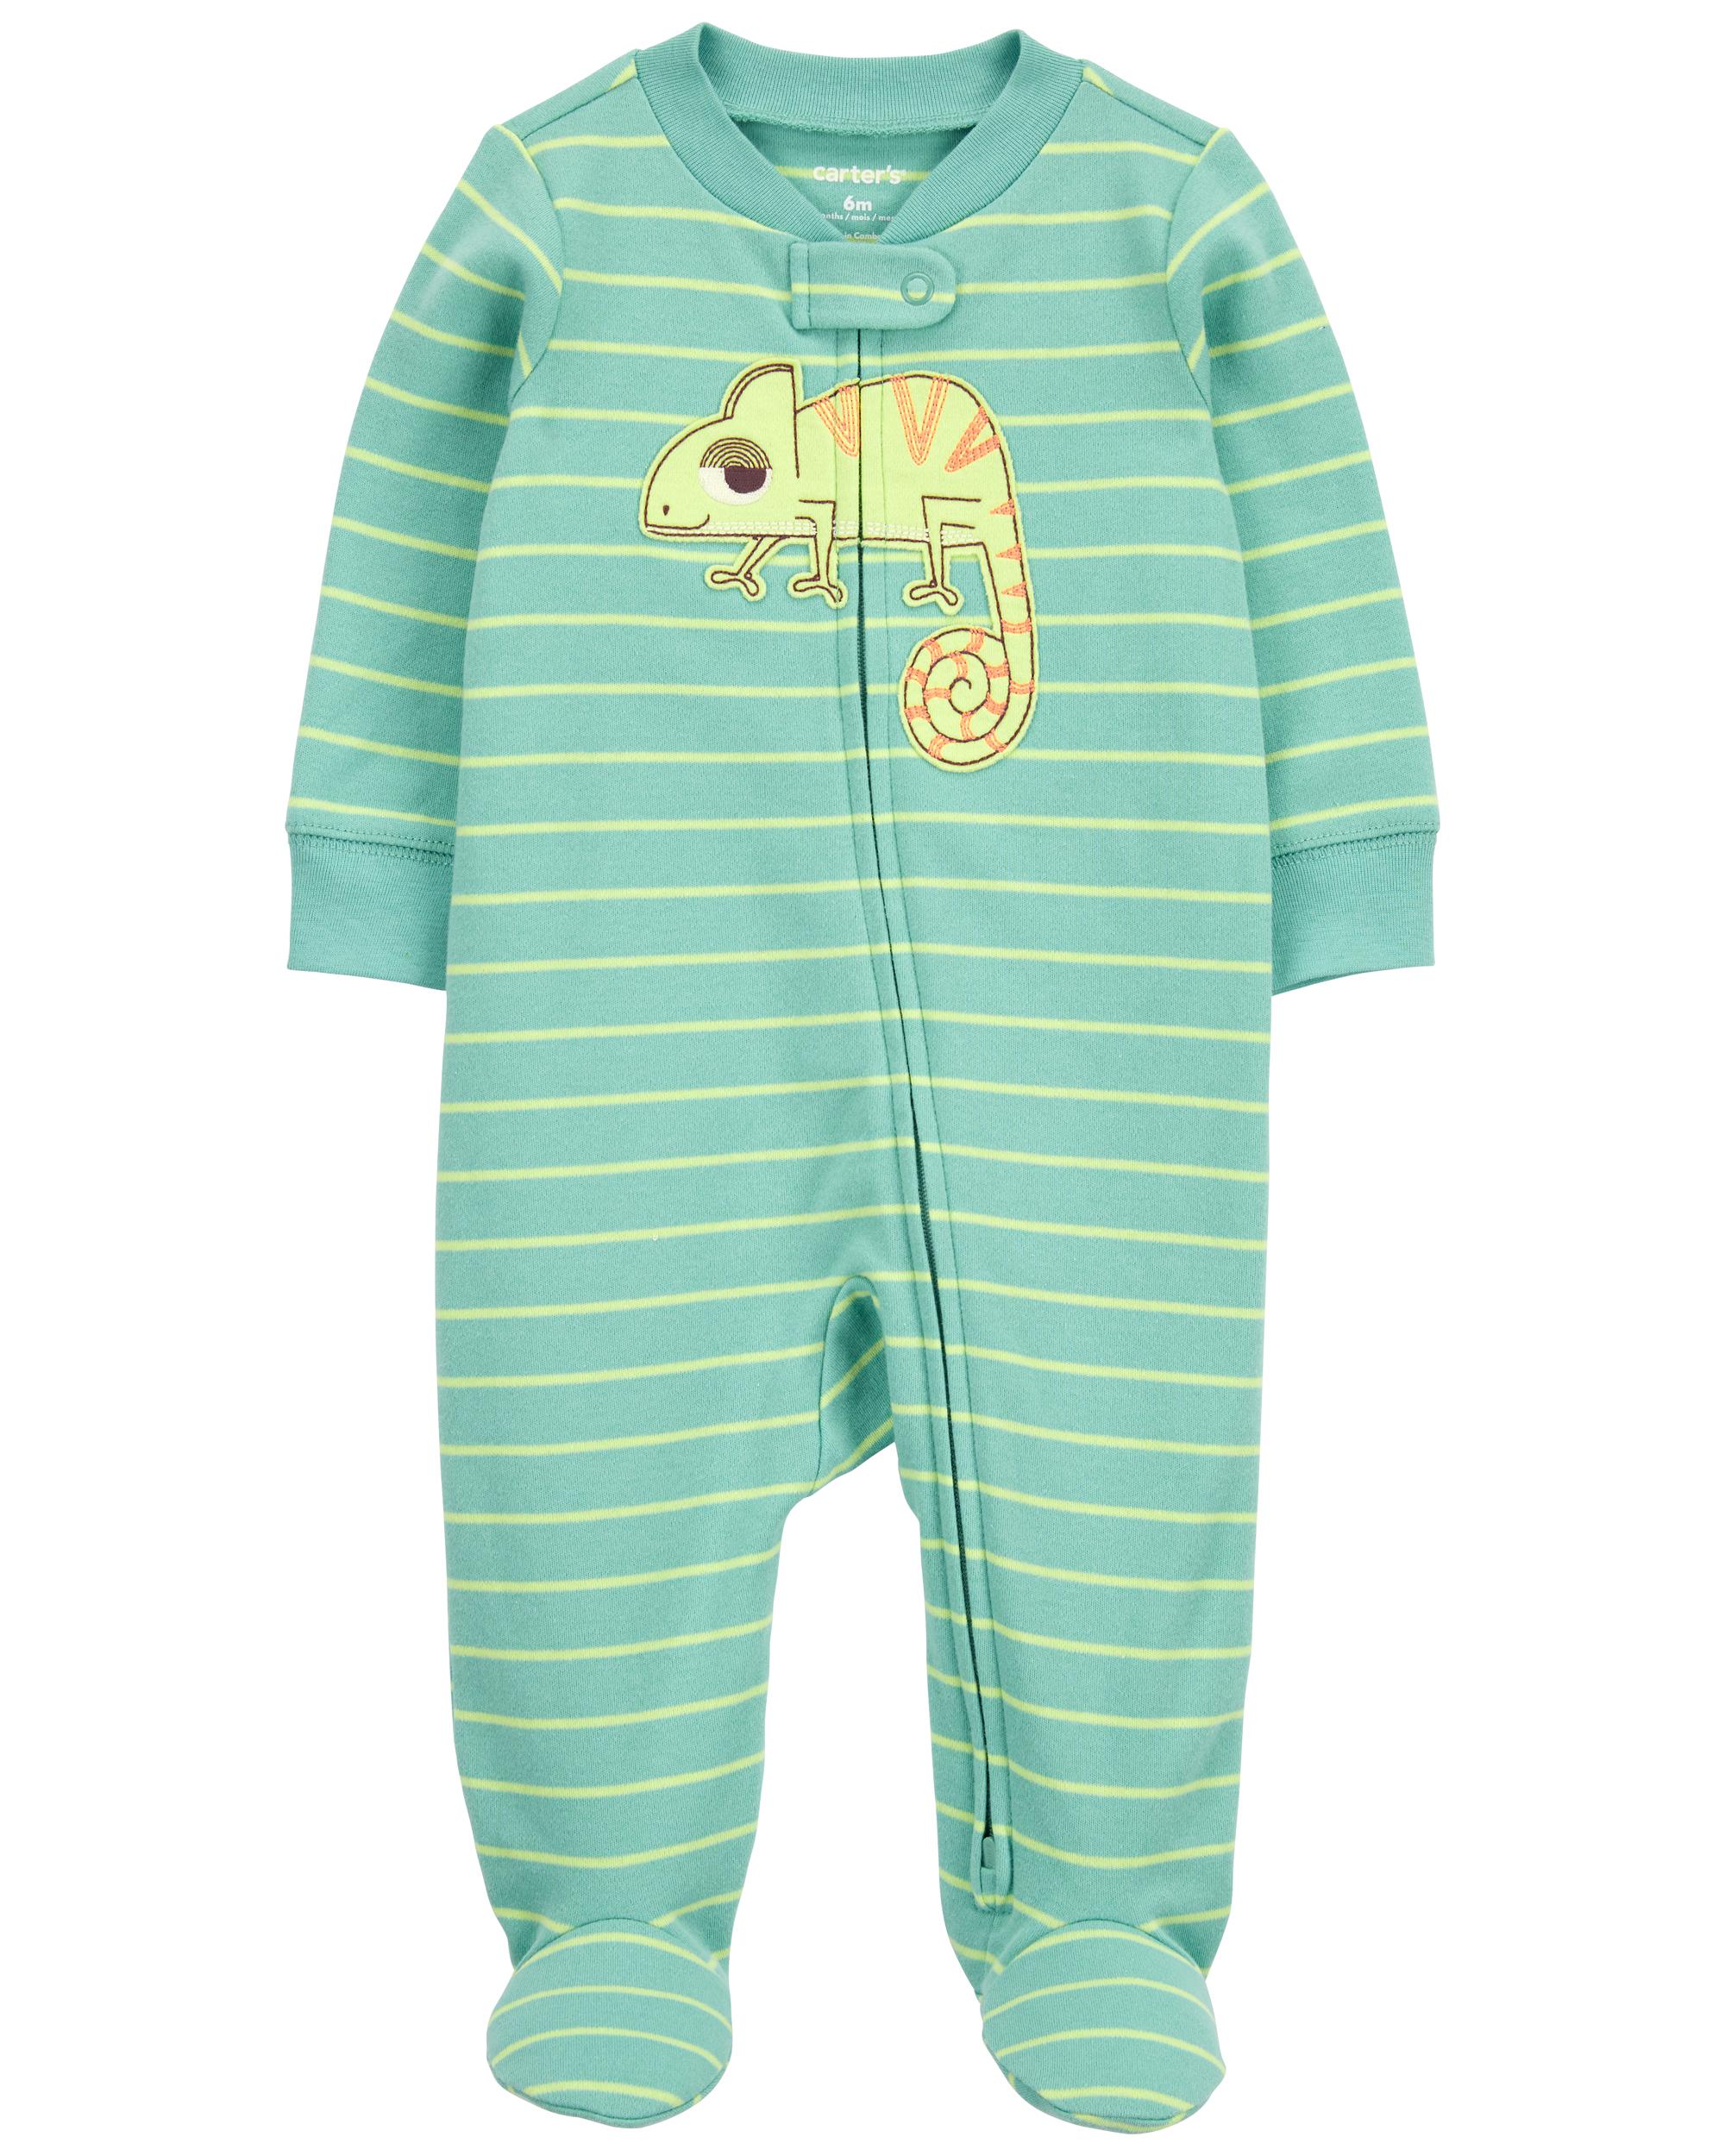 Baby Iguana Snap-Up Cotton Sleeper Pyjamas